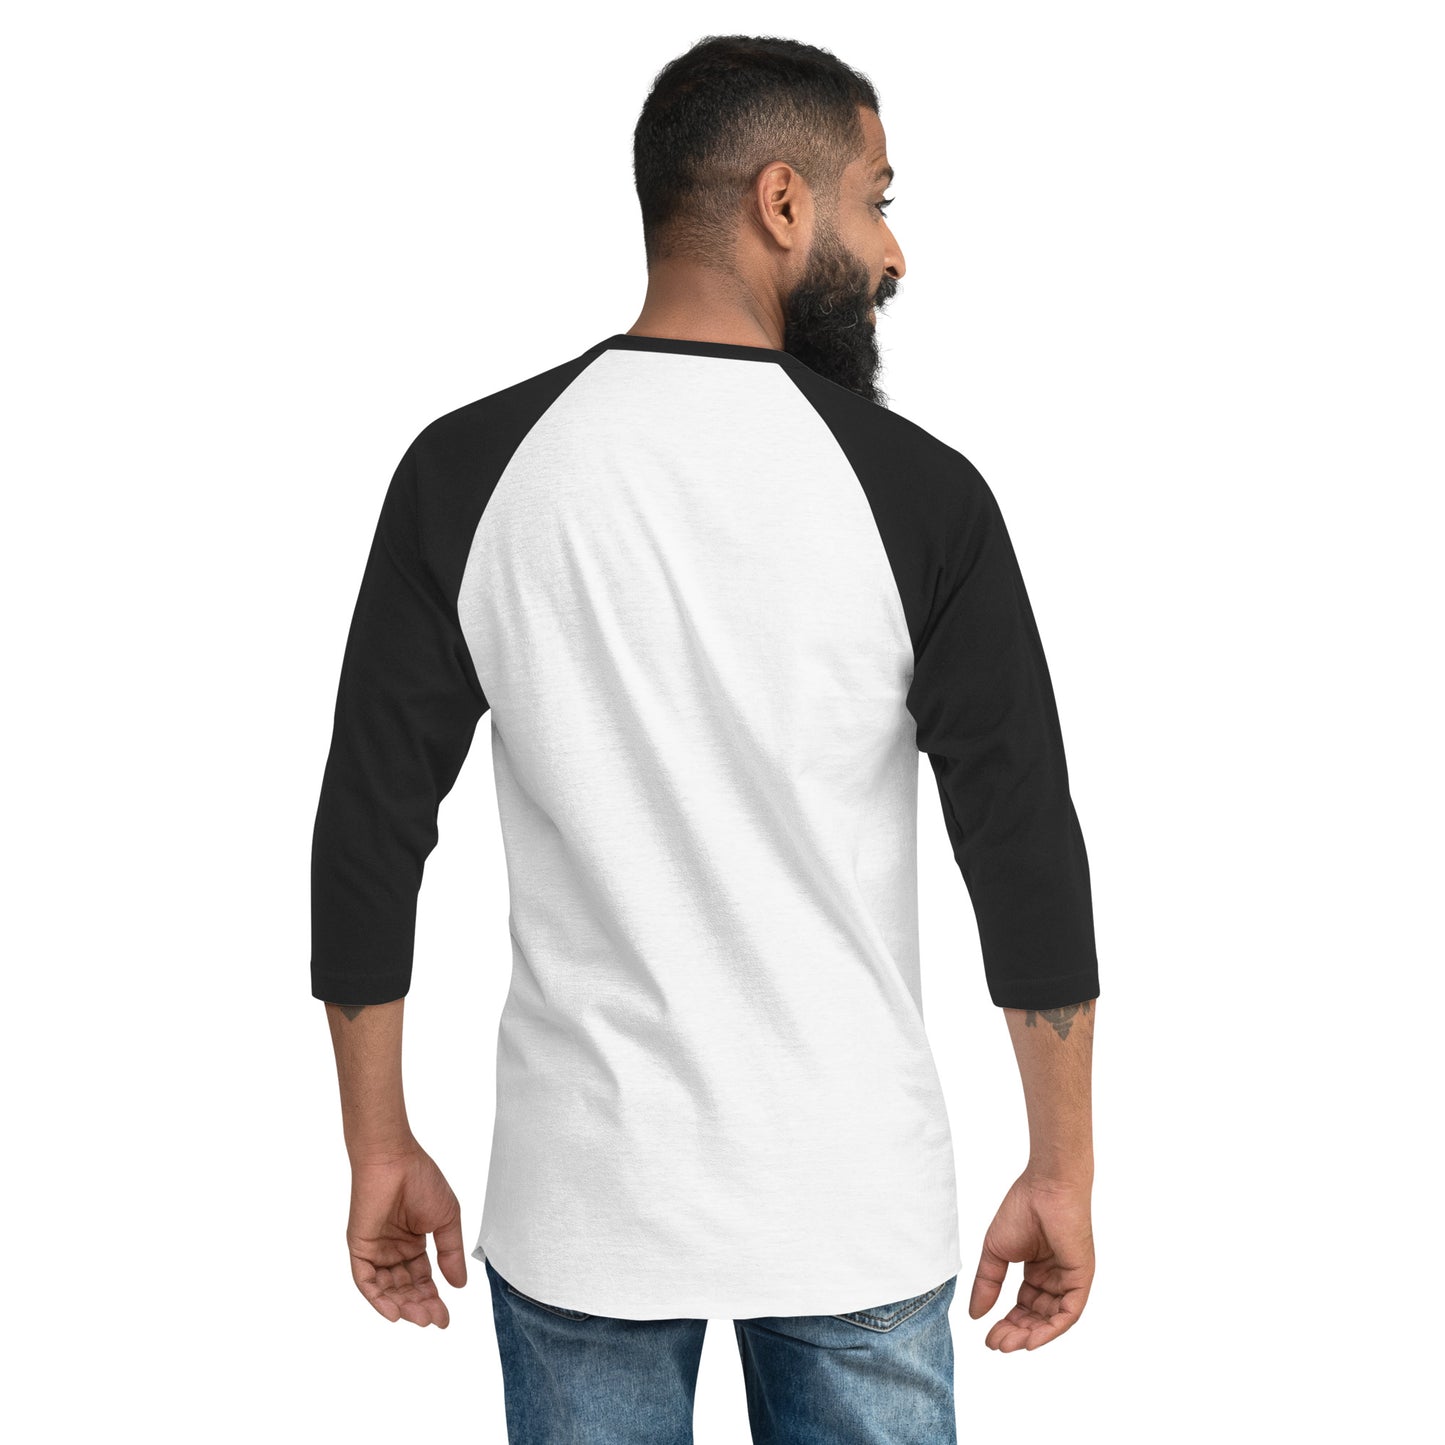 Space Cat 3/4 sleeve raglan shirt